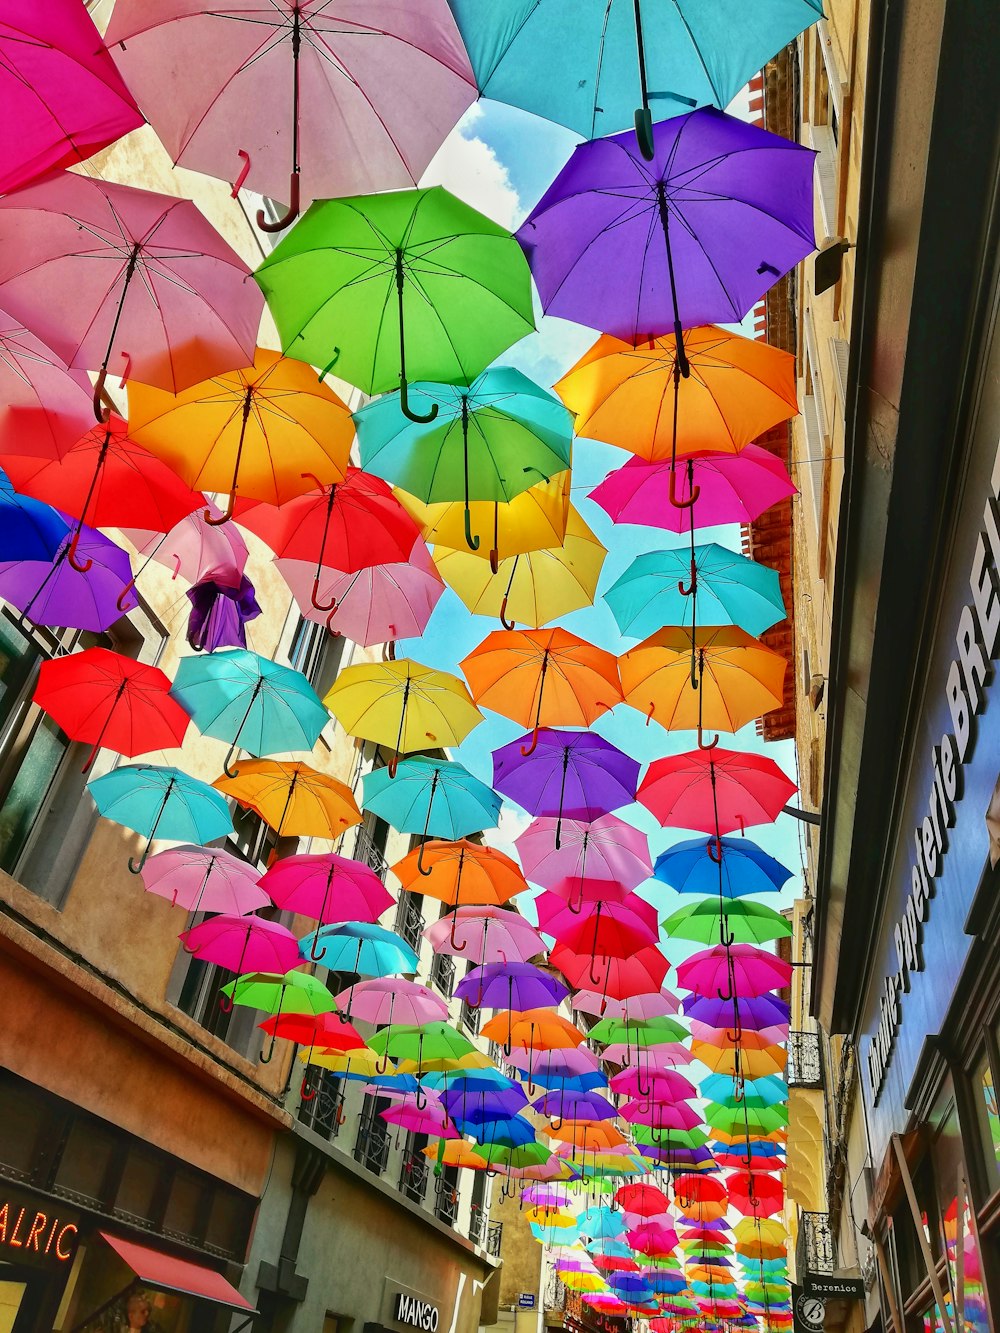 Assorted-color umbrellas photo – Free Umbrella Image on Unsplash